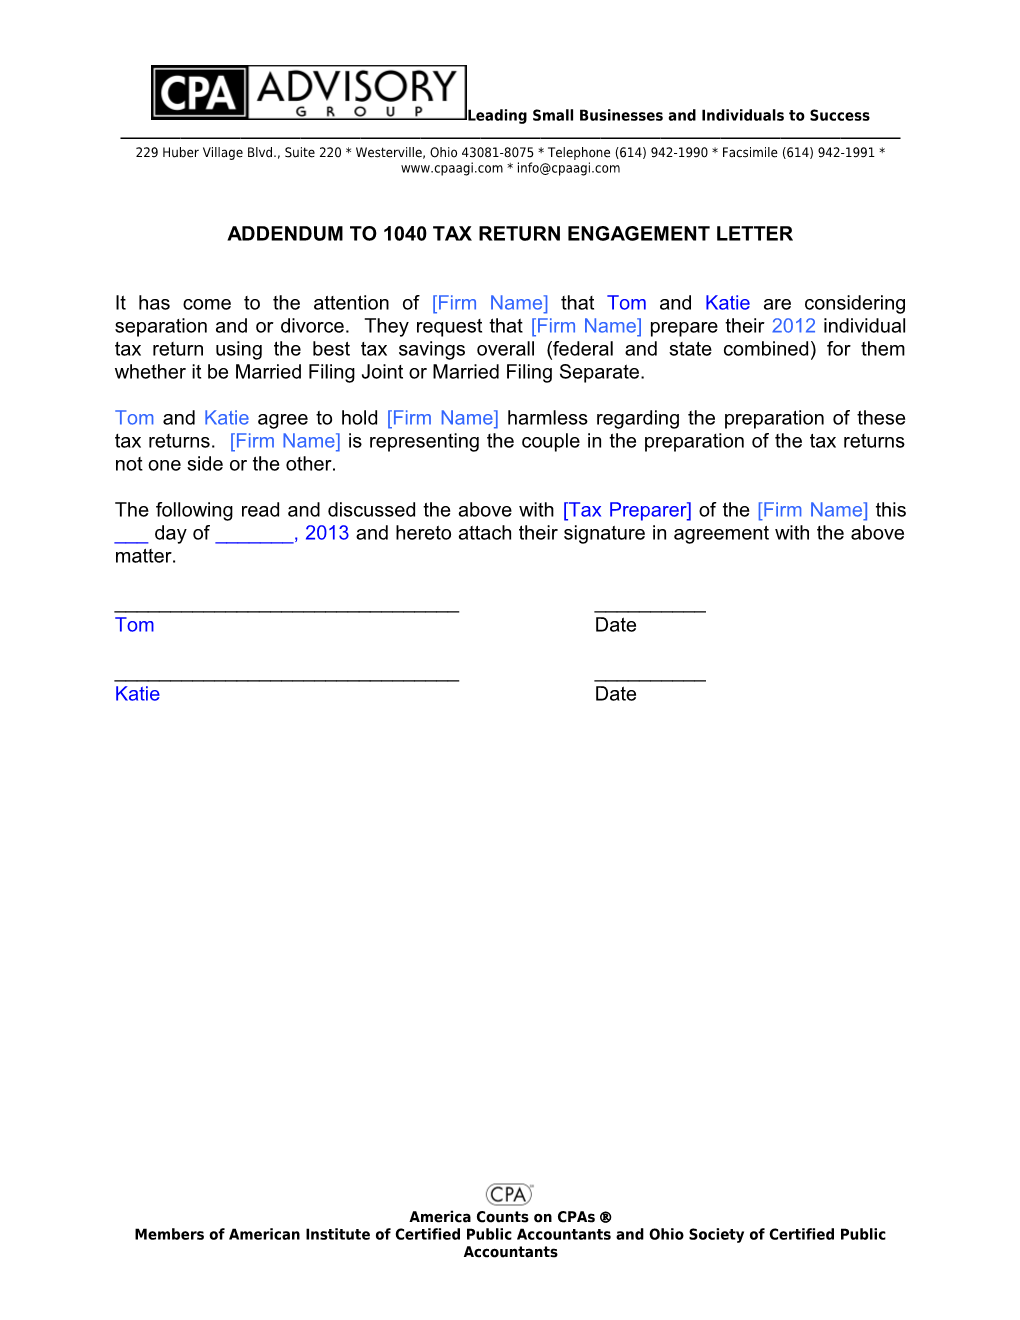 Addendum to 1040 Tax Return Engagement Letter